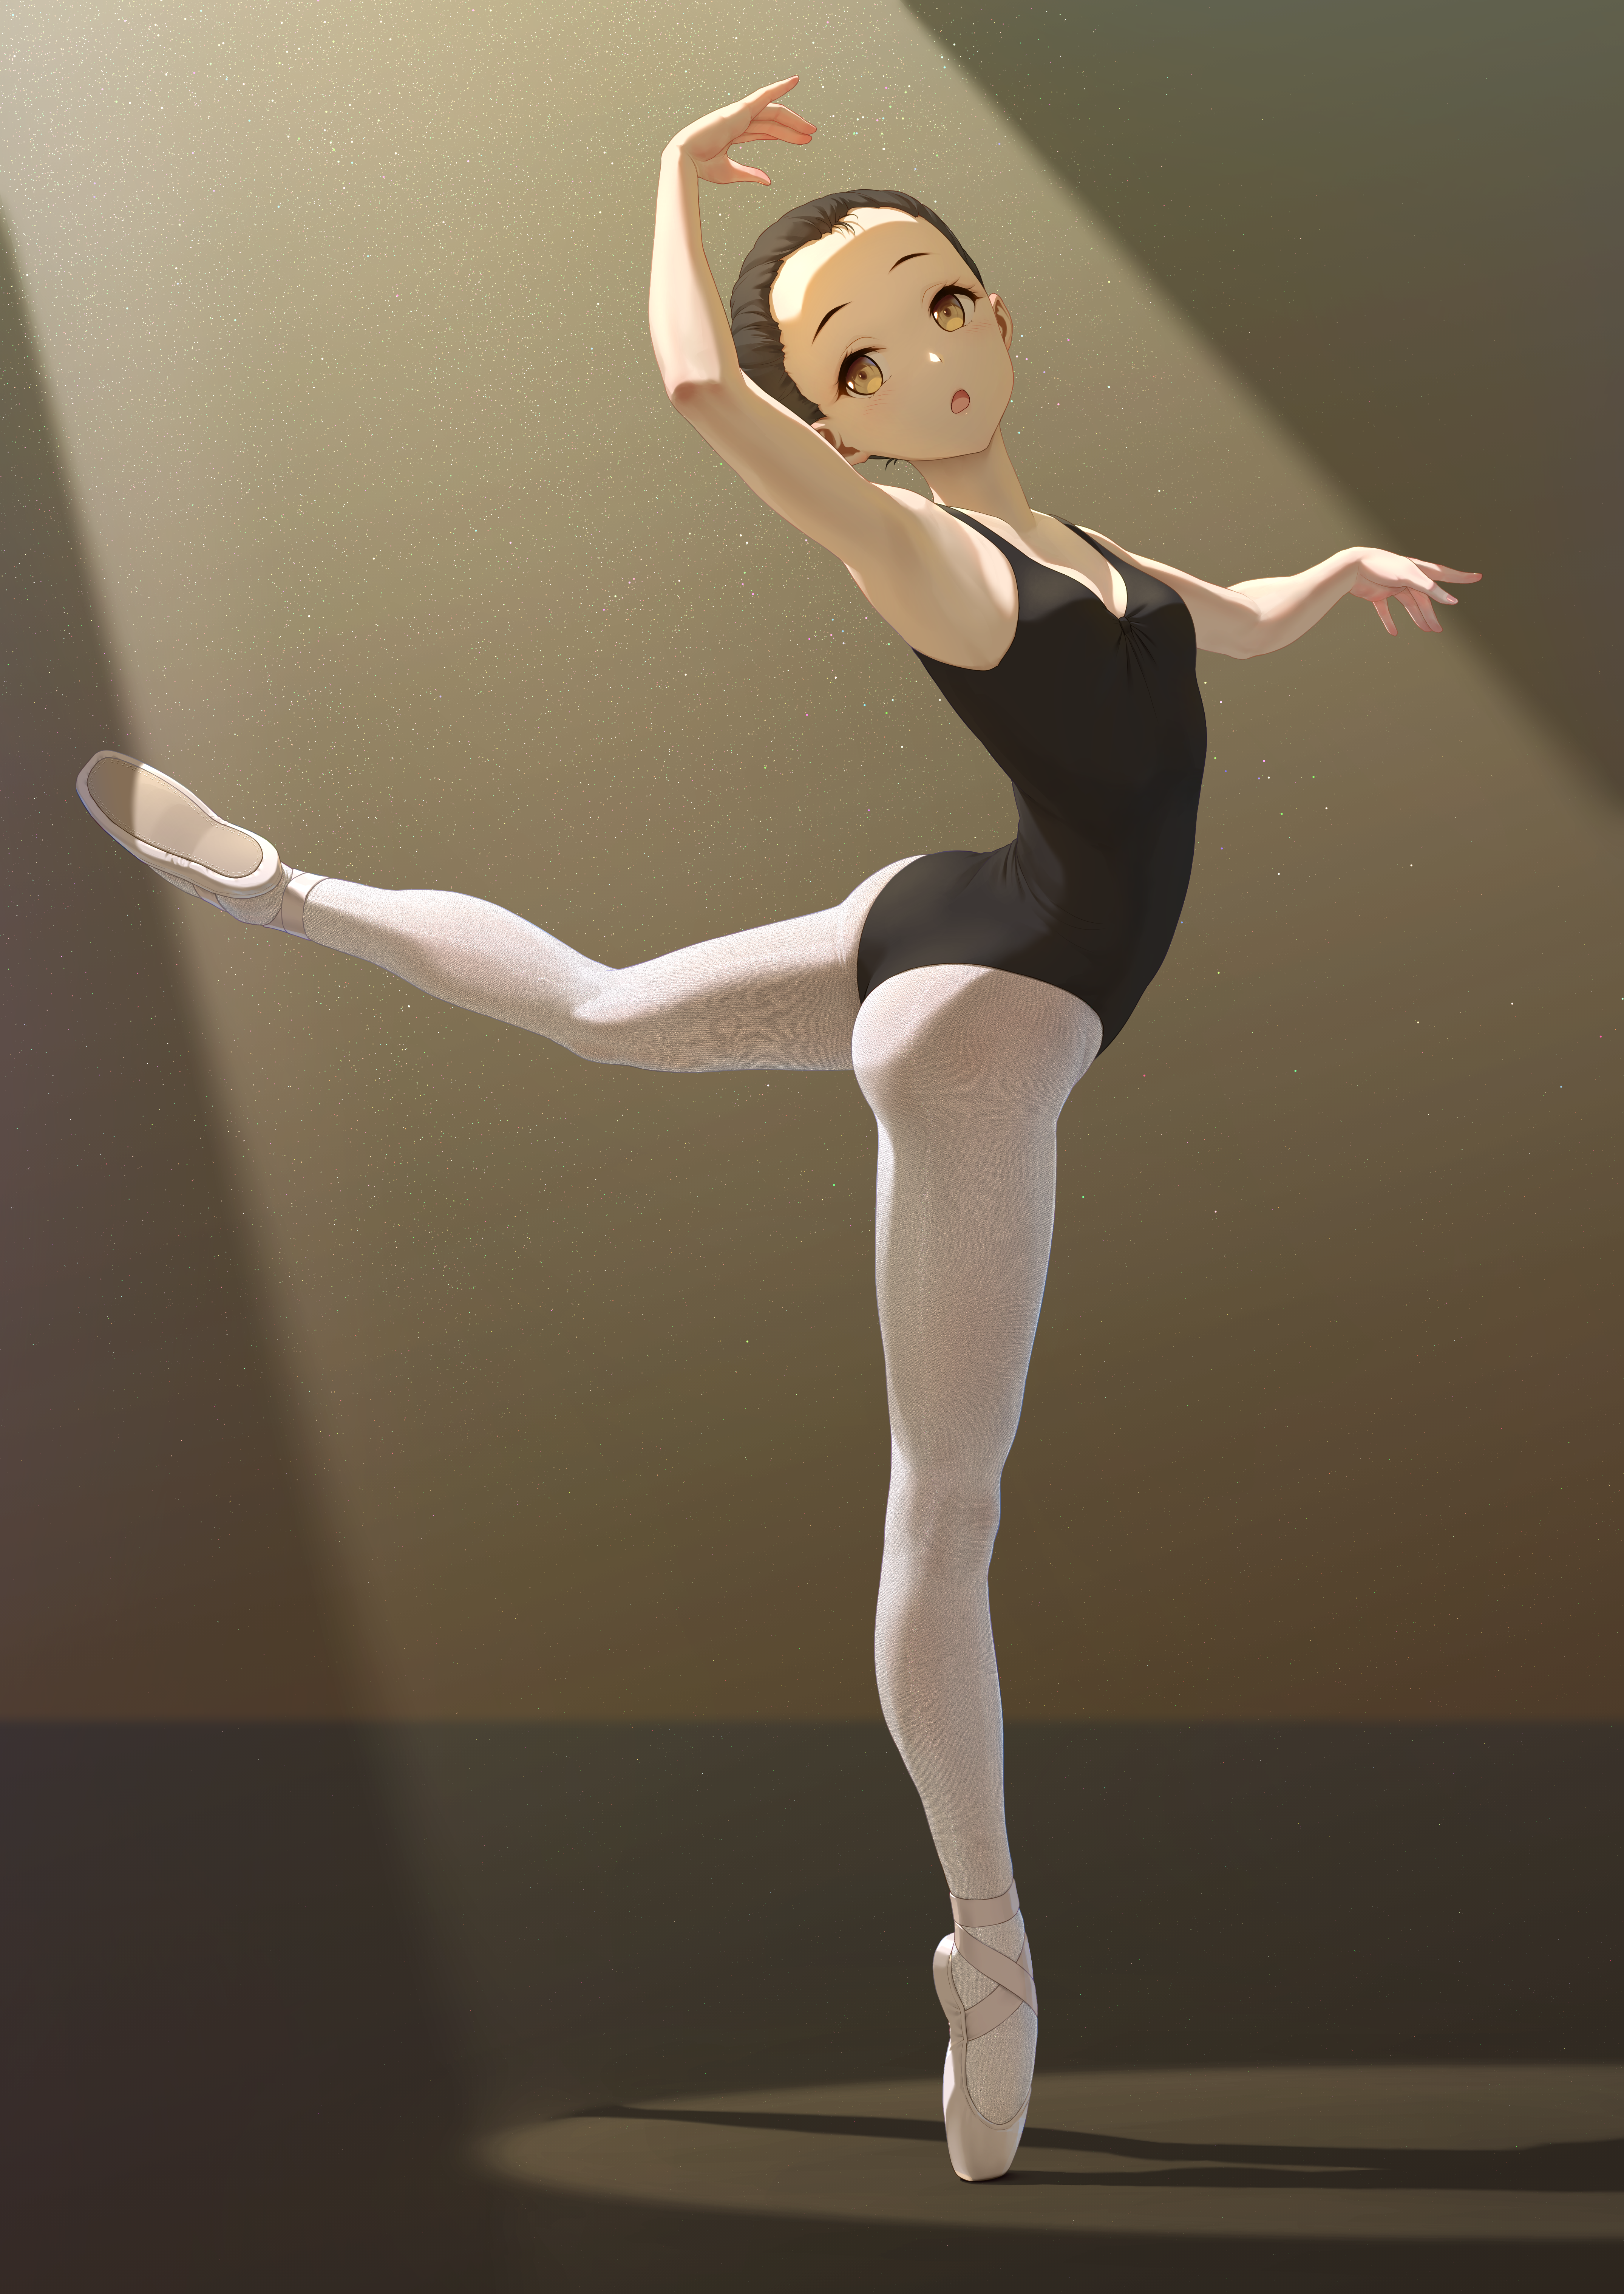 The Pretty Lady Ballet by Disneyponyfan on DeviantArt